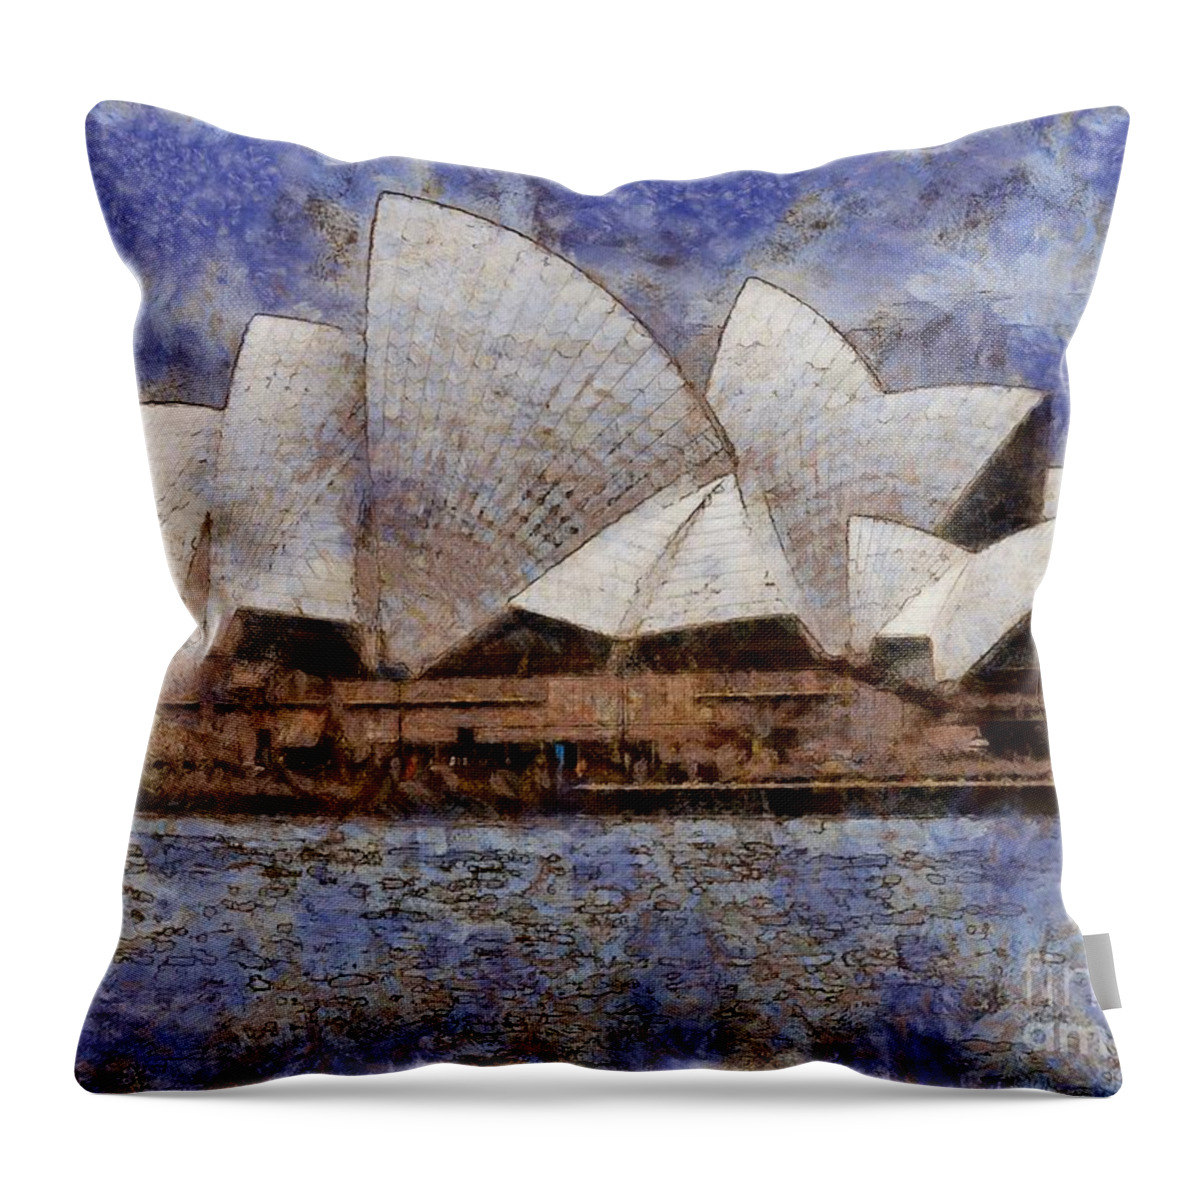 Sydney Throw Pillow featuring the digital art Sydney Opera House by Fran Woods